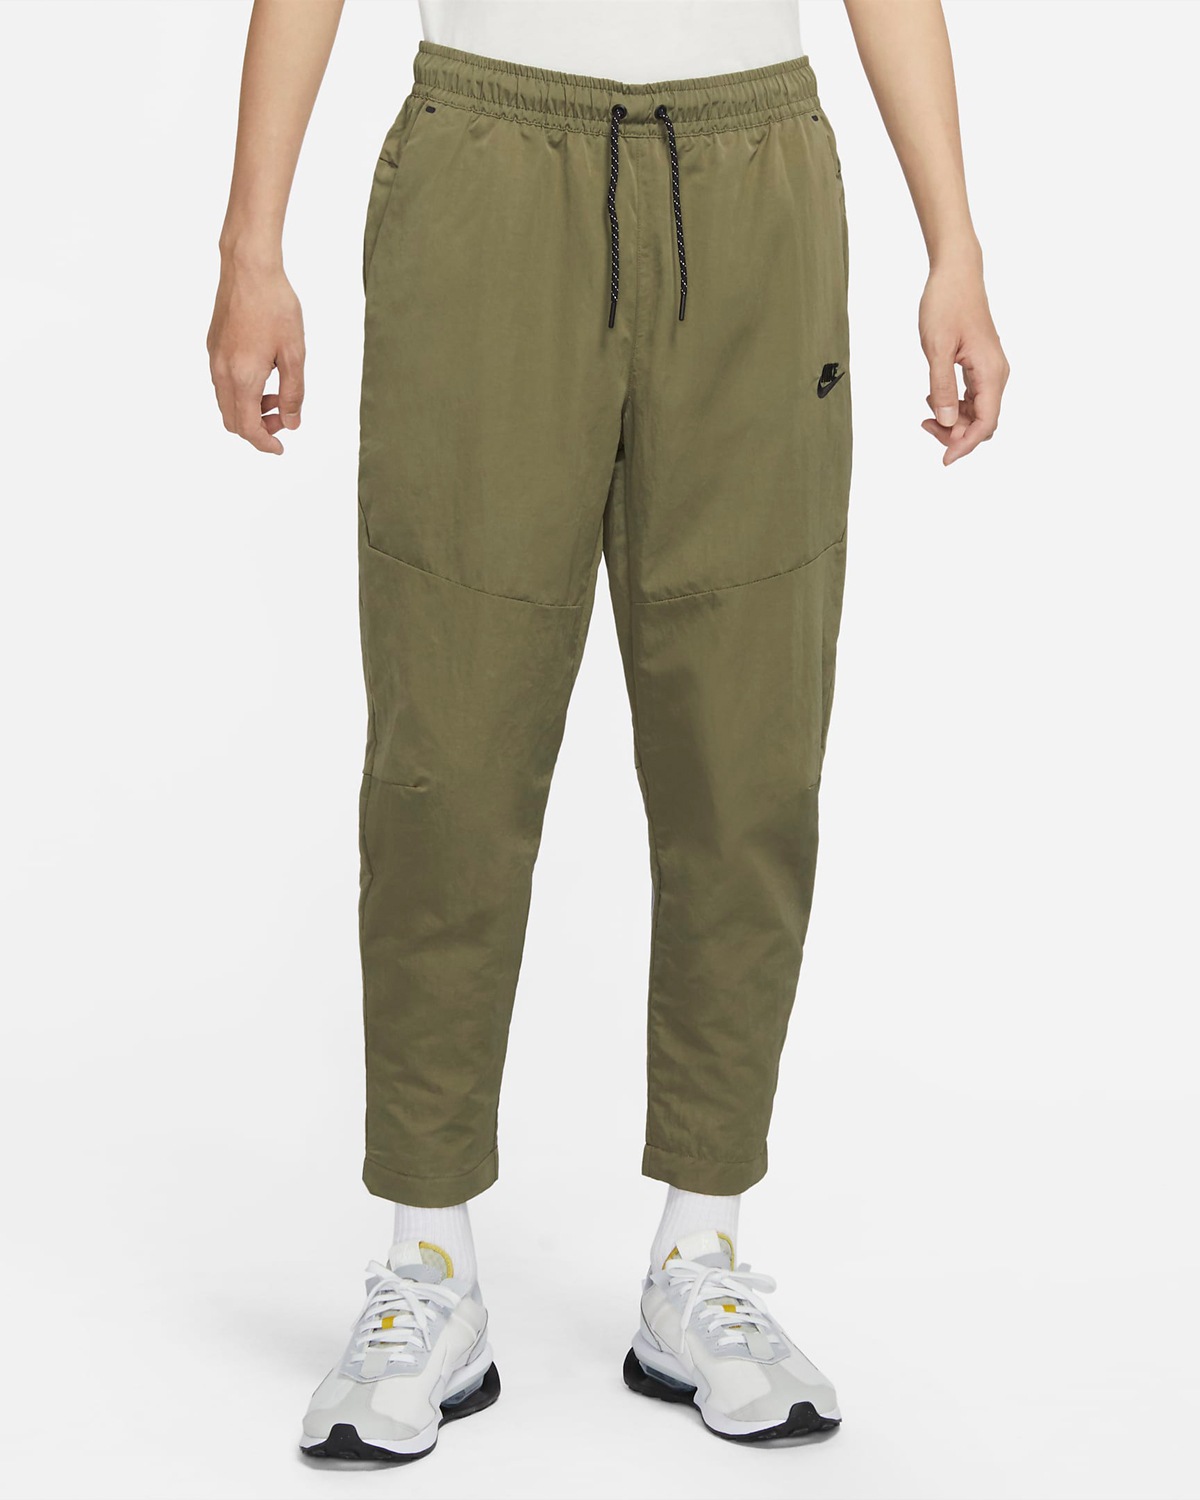 Nike-Tech-Essentials-Pants-Medium-Olive